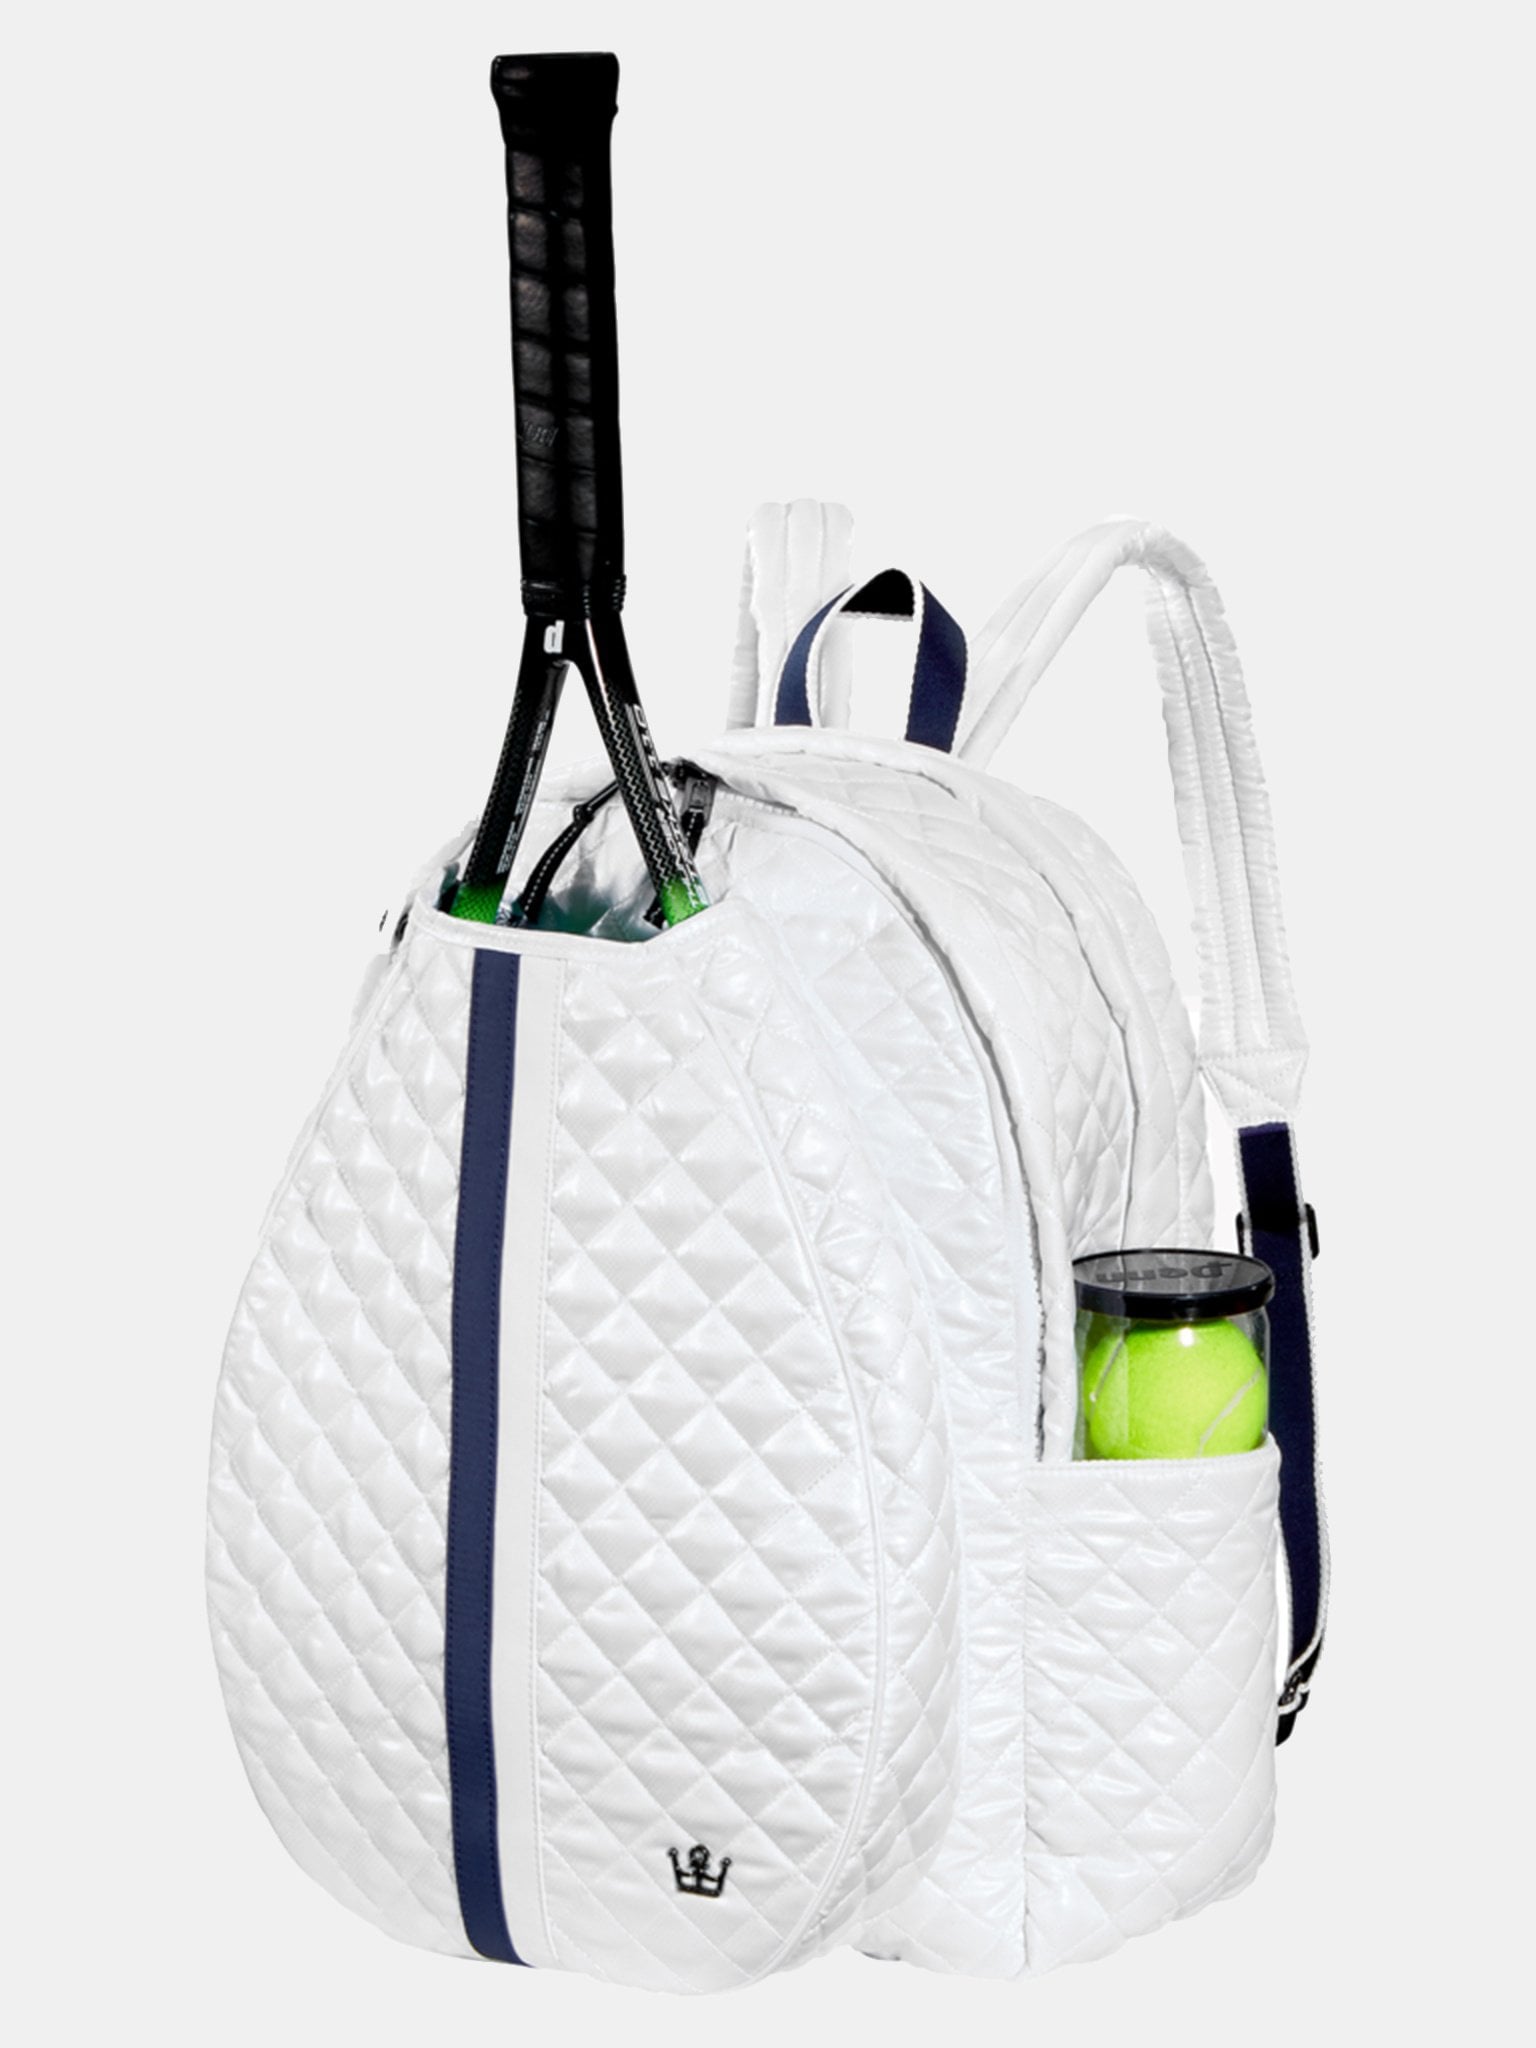 15 Best Tennis Bags in 2023 — Tennis Bags for Women